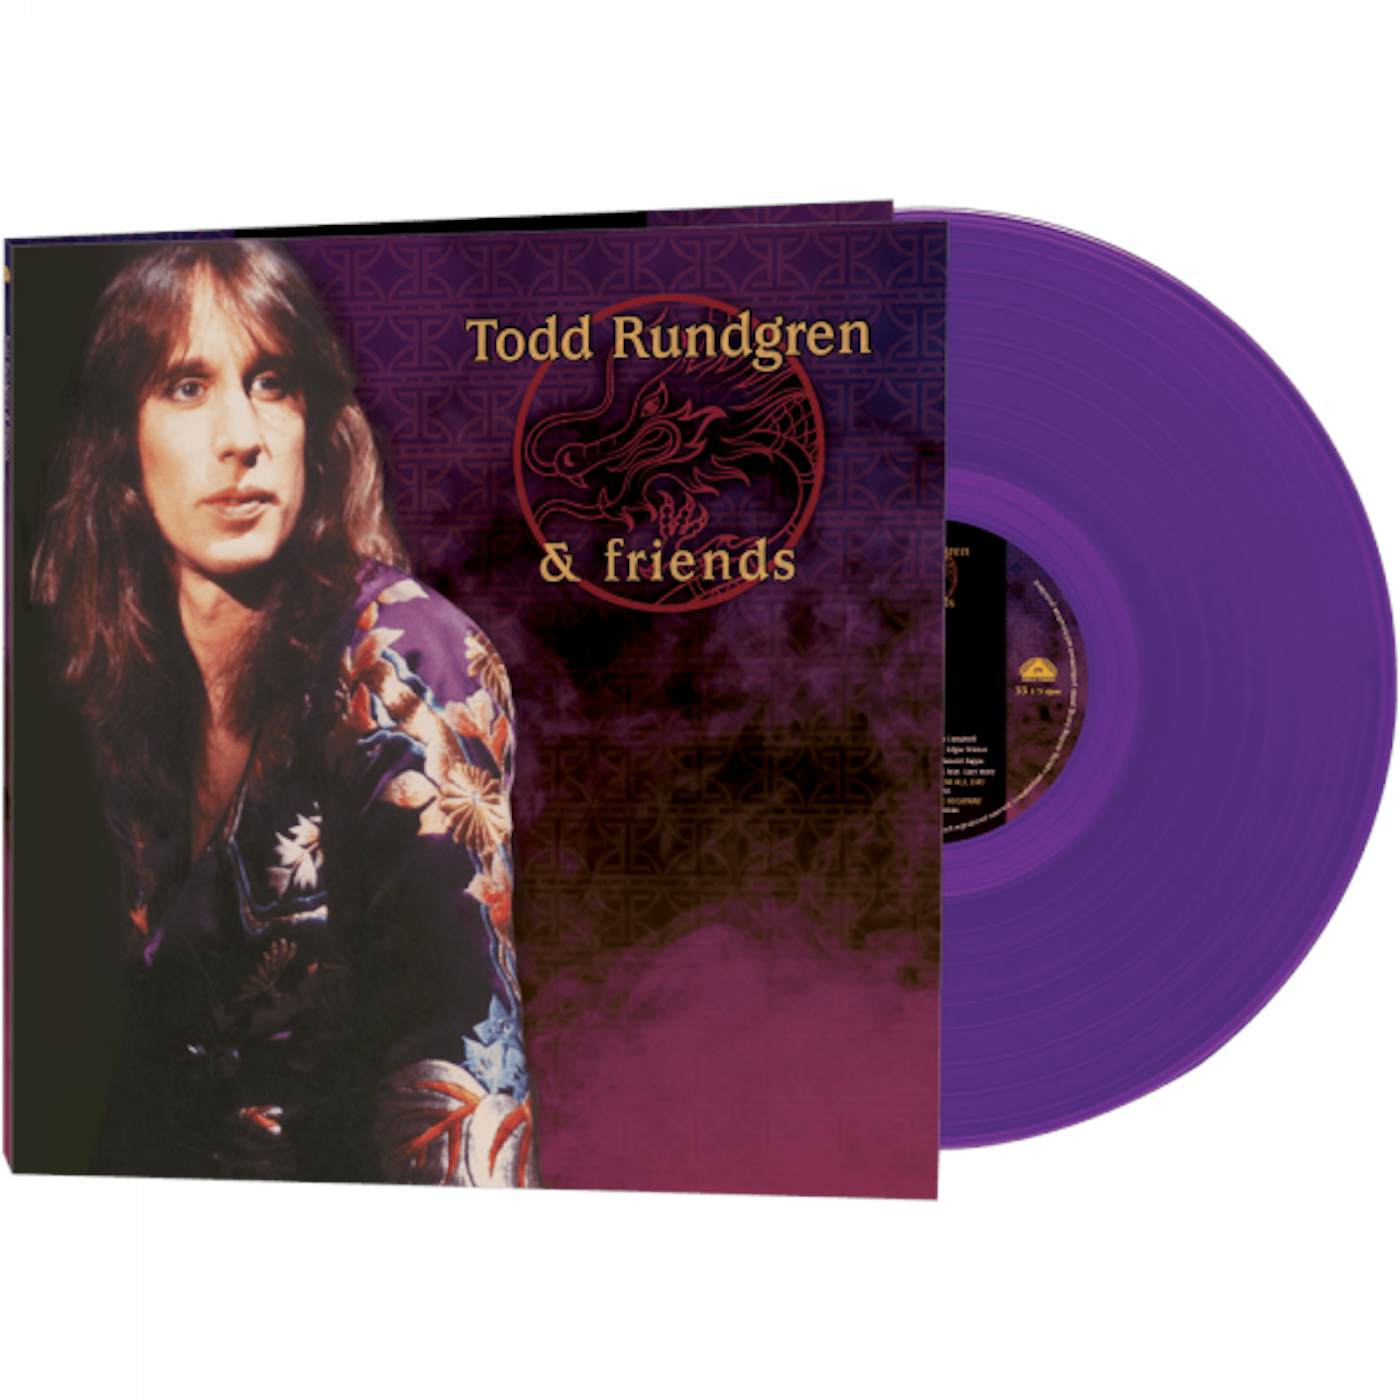 Todd Rundgren LP Vinyl Record - Todd Rundgren & Friends (Purple Vinyl)